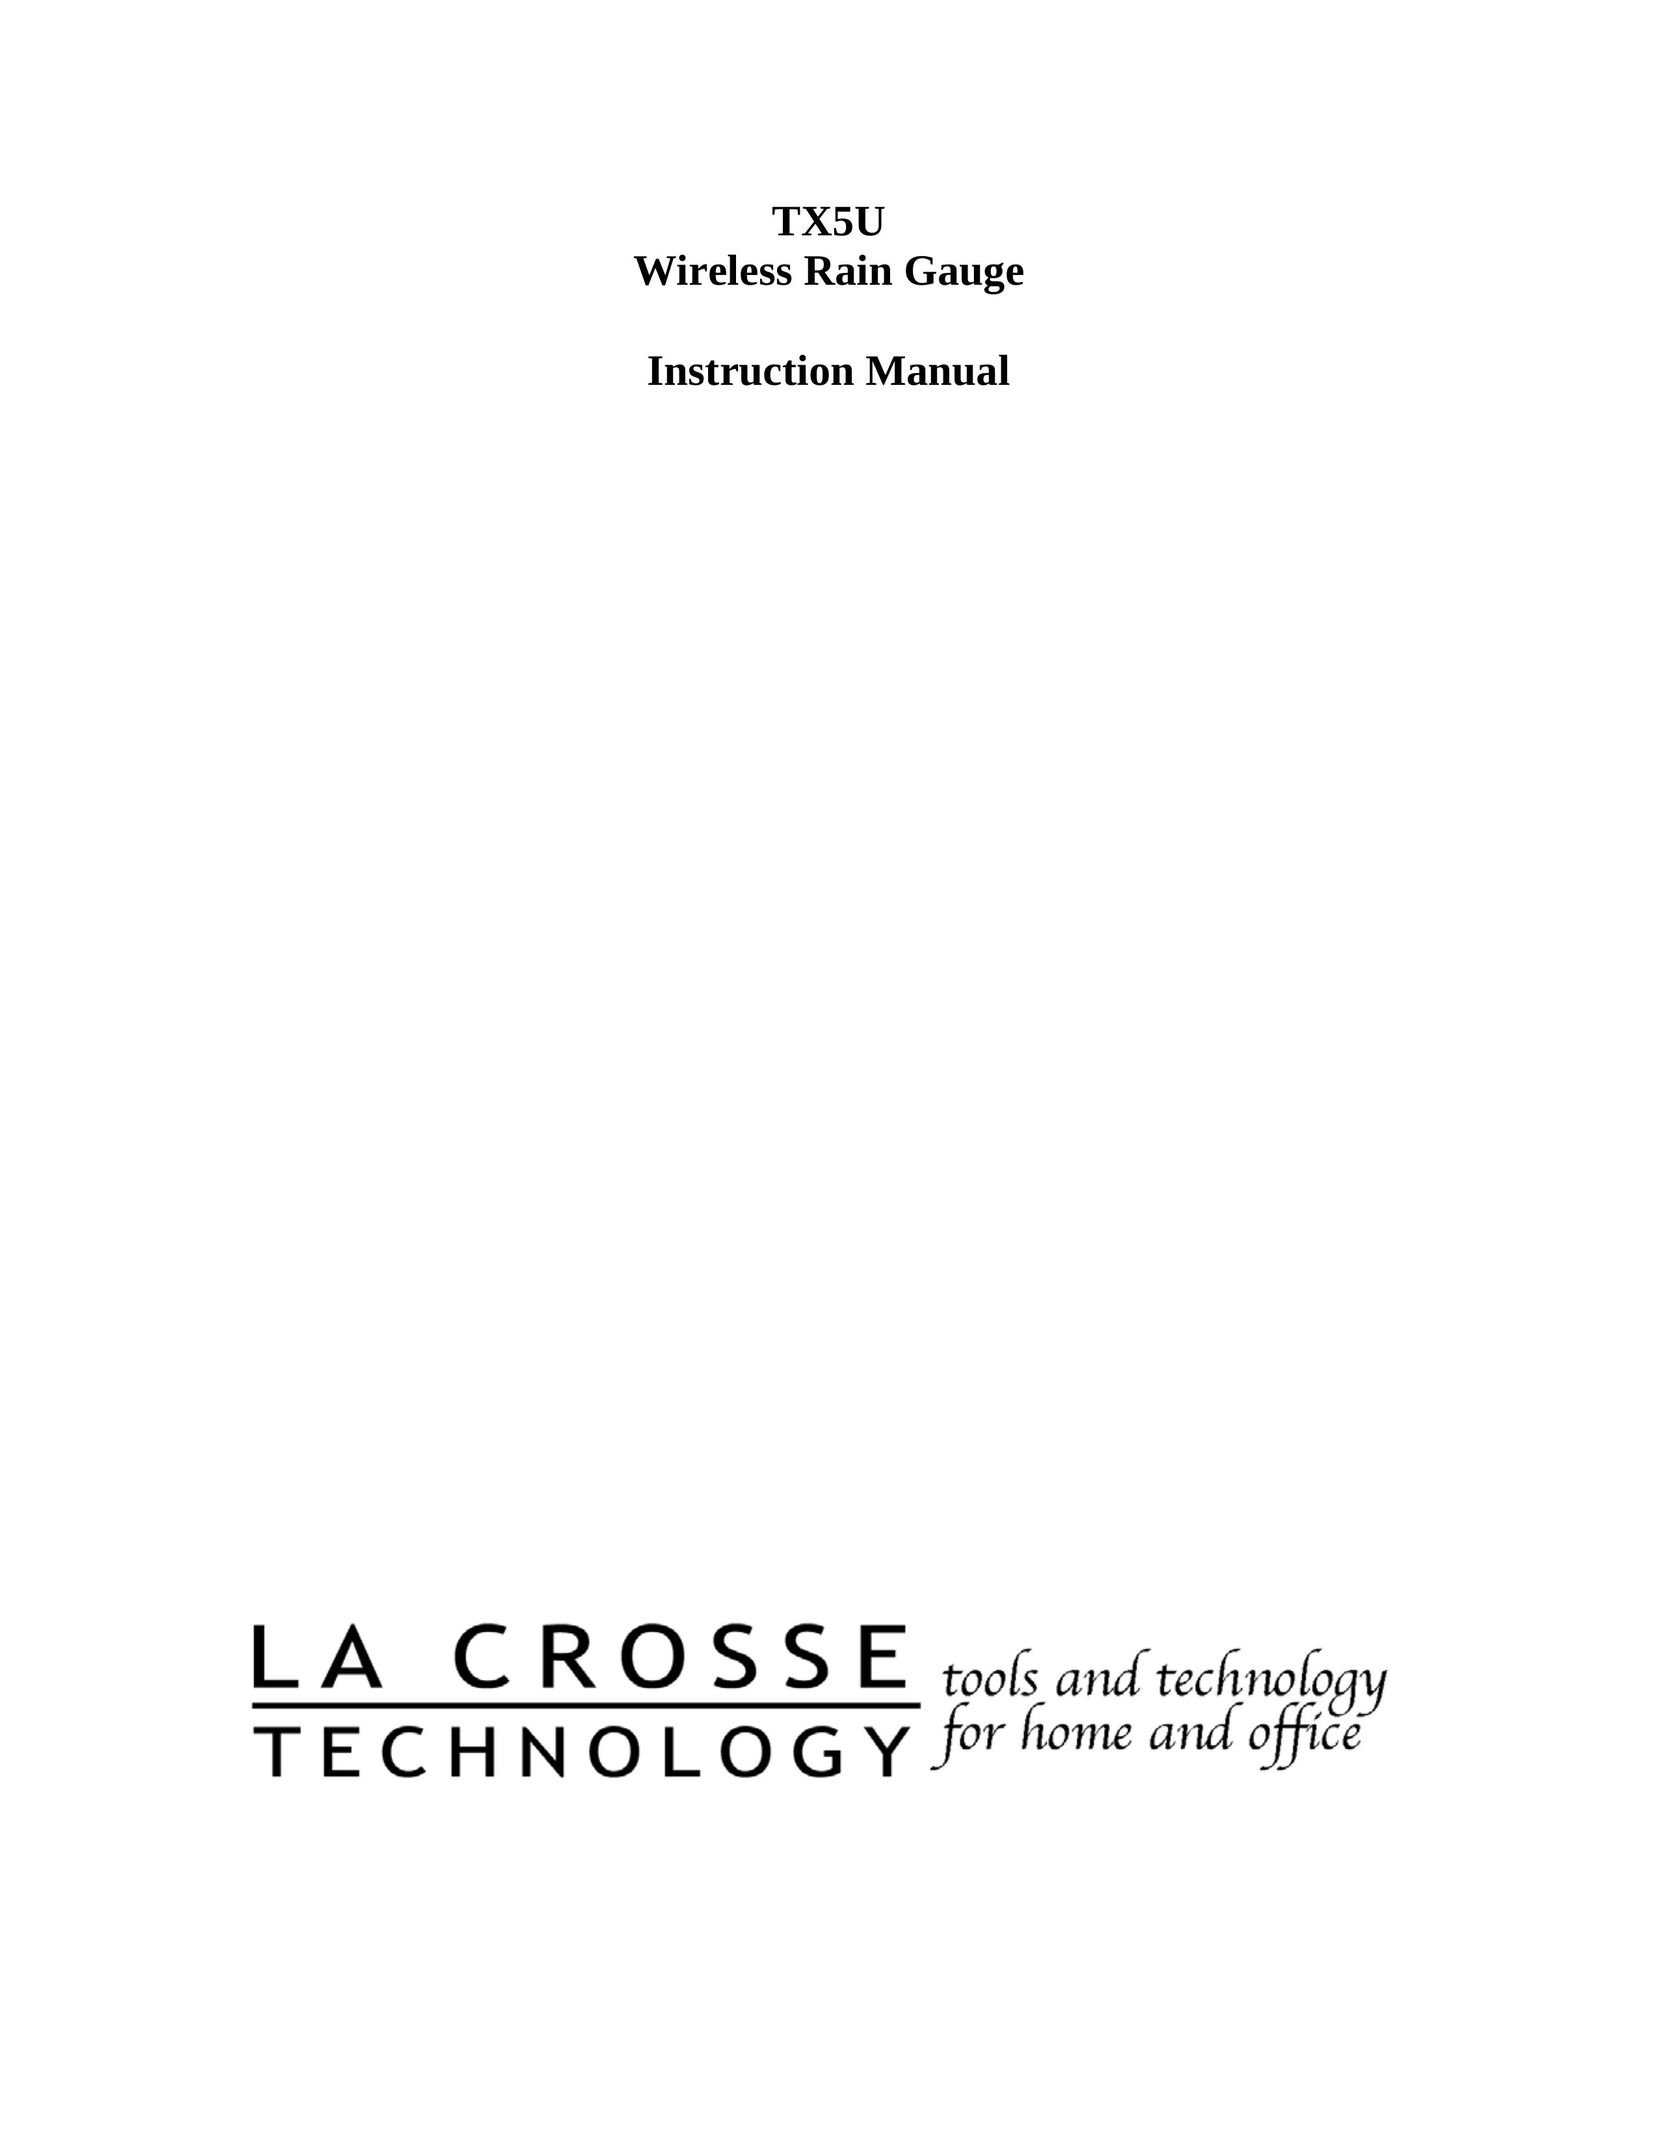 La Crosse Technology TX5U Portable Radio User Manual